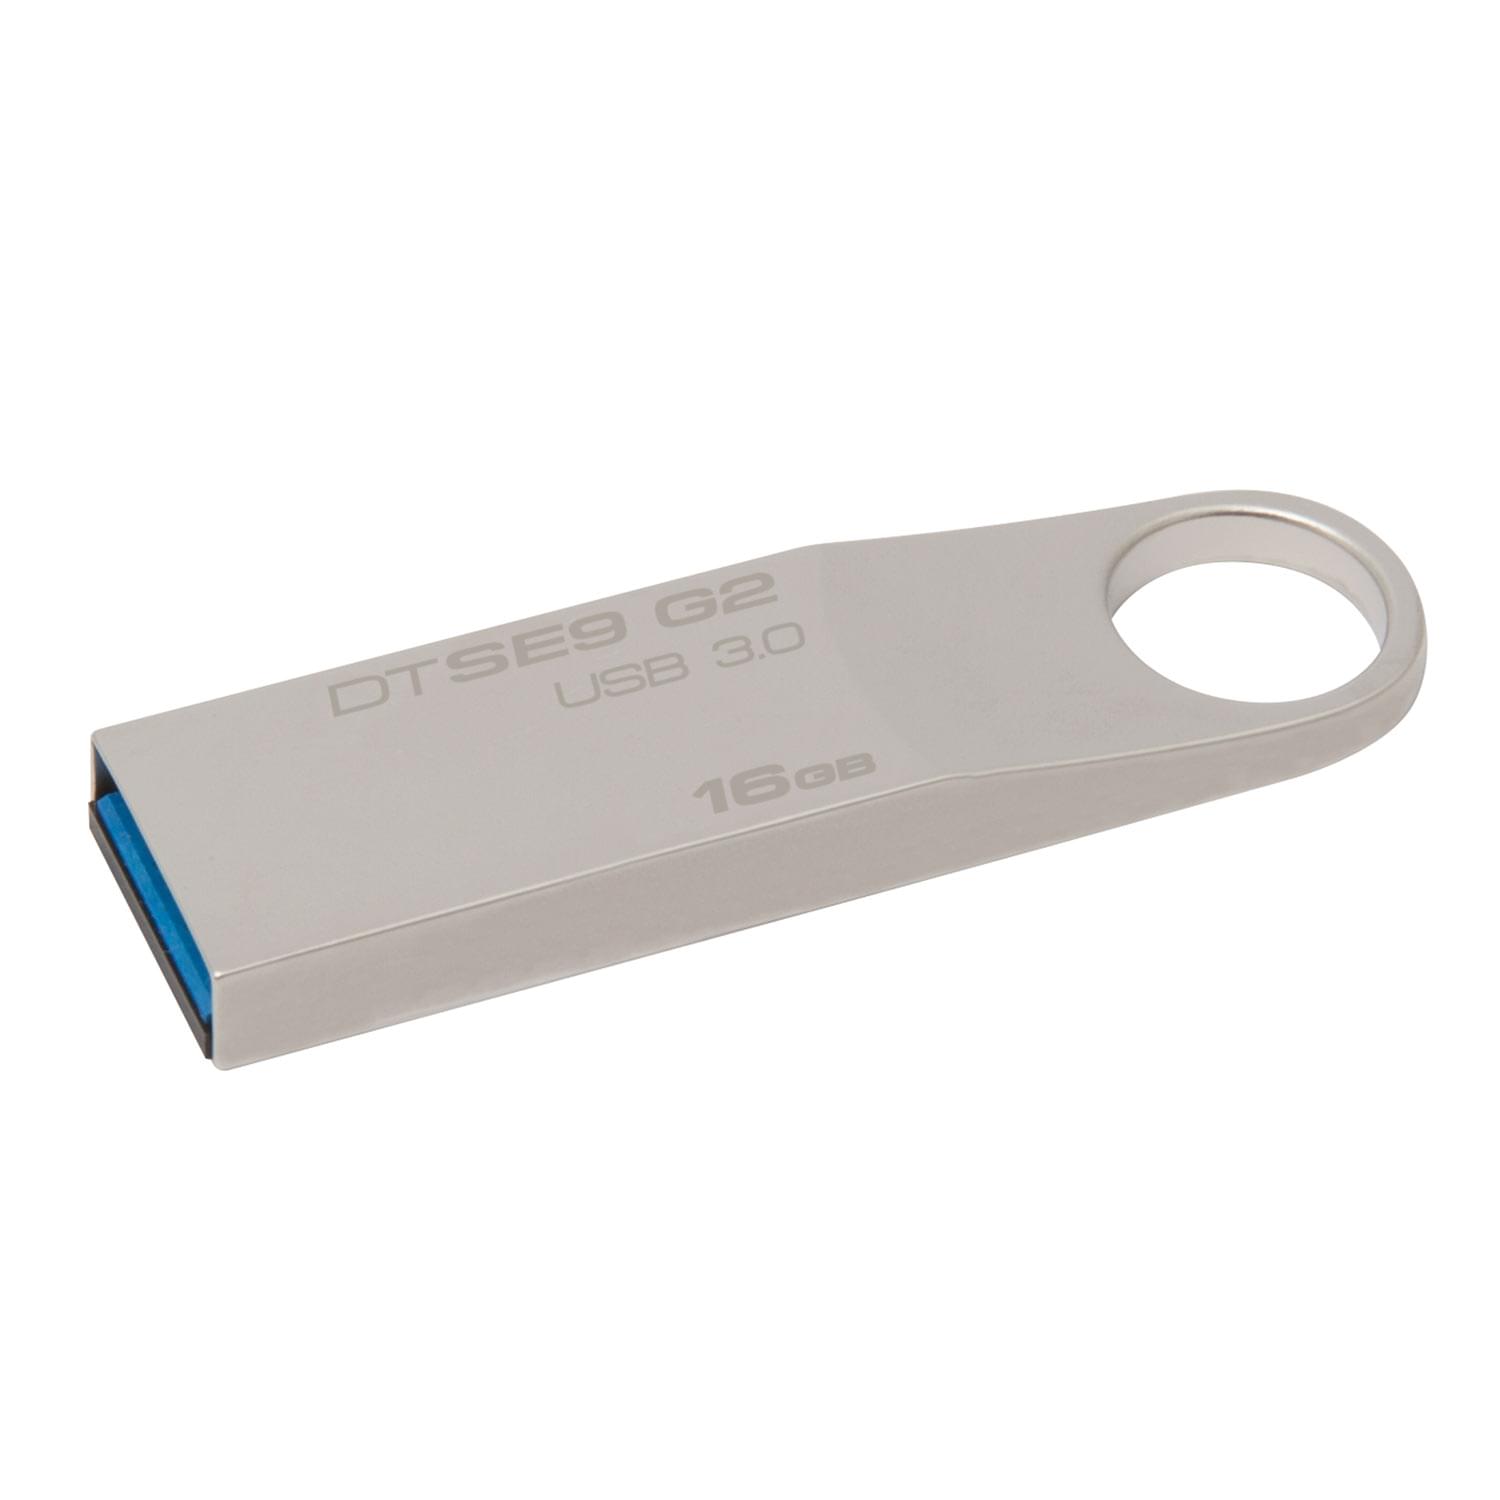 Clé USB Kingston Clé 16Go USB 3.0 SE9 G2 DTSE9G2/16GB (metal)